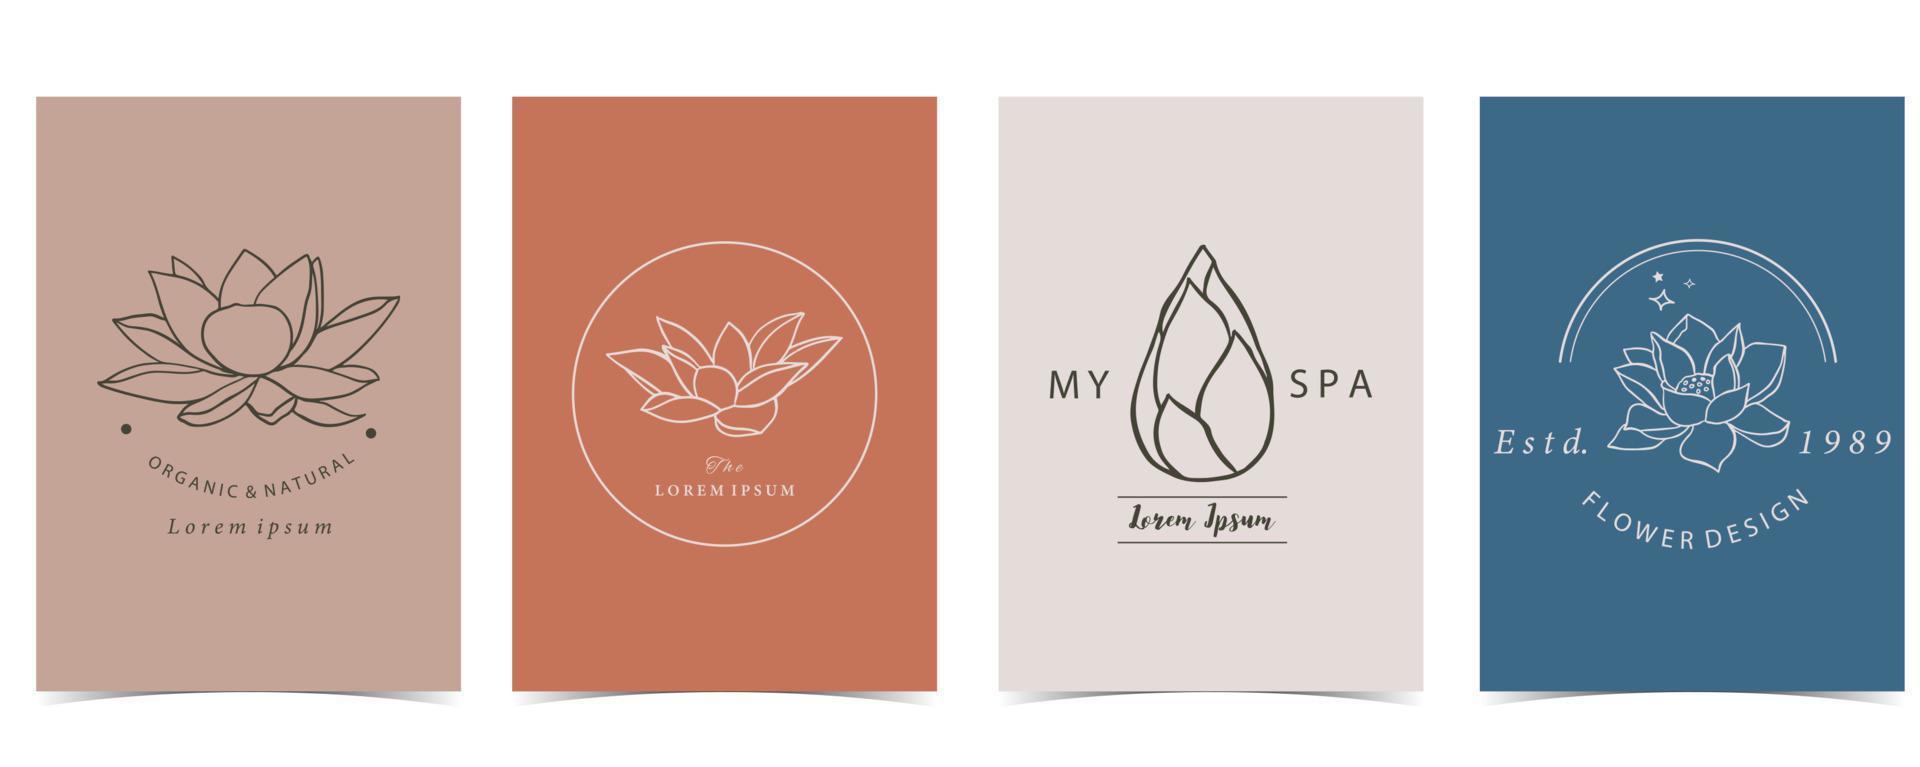 Black lotus background. Line art design for postcard, invitation ,packaging vector